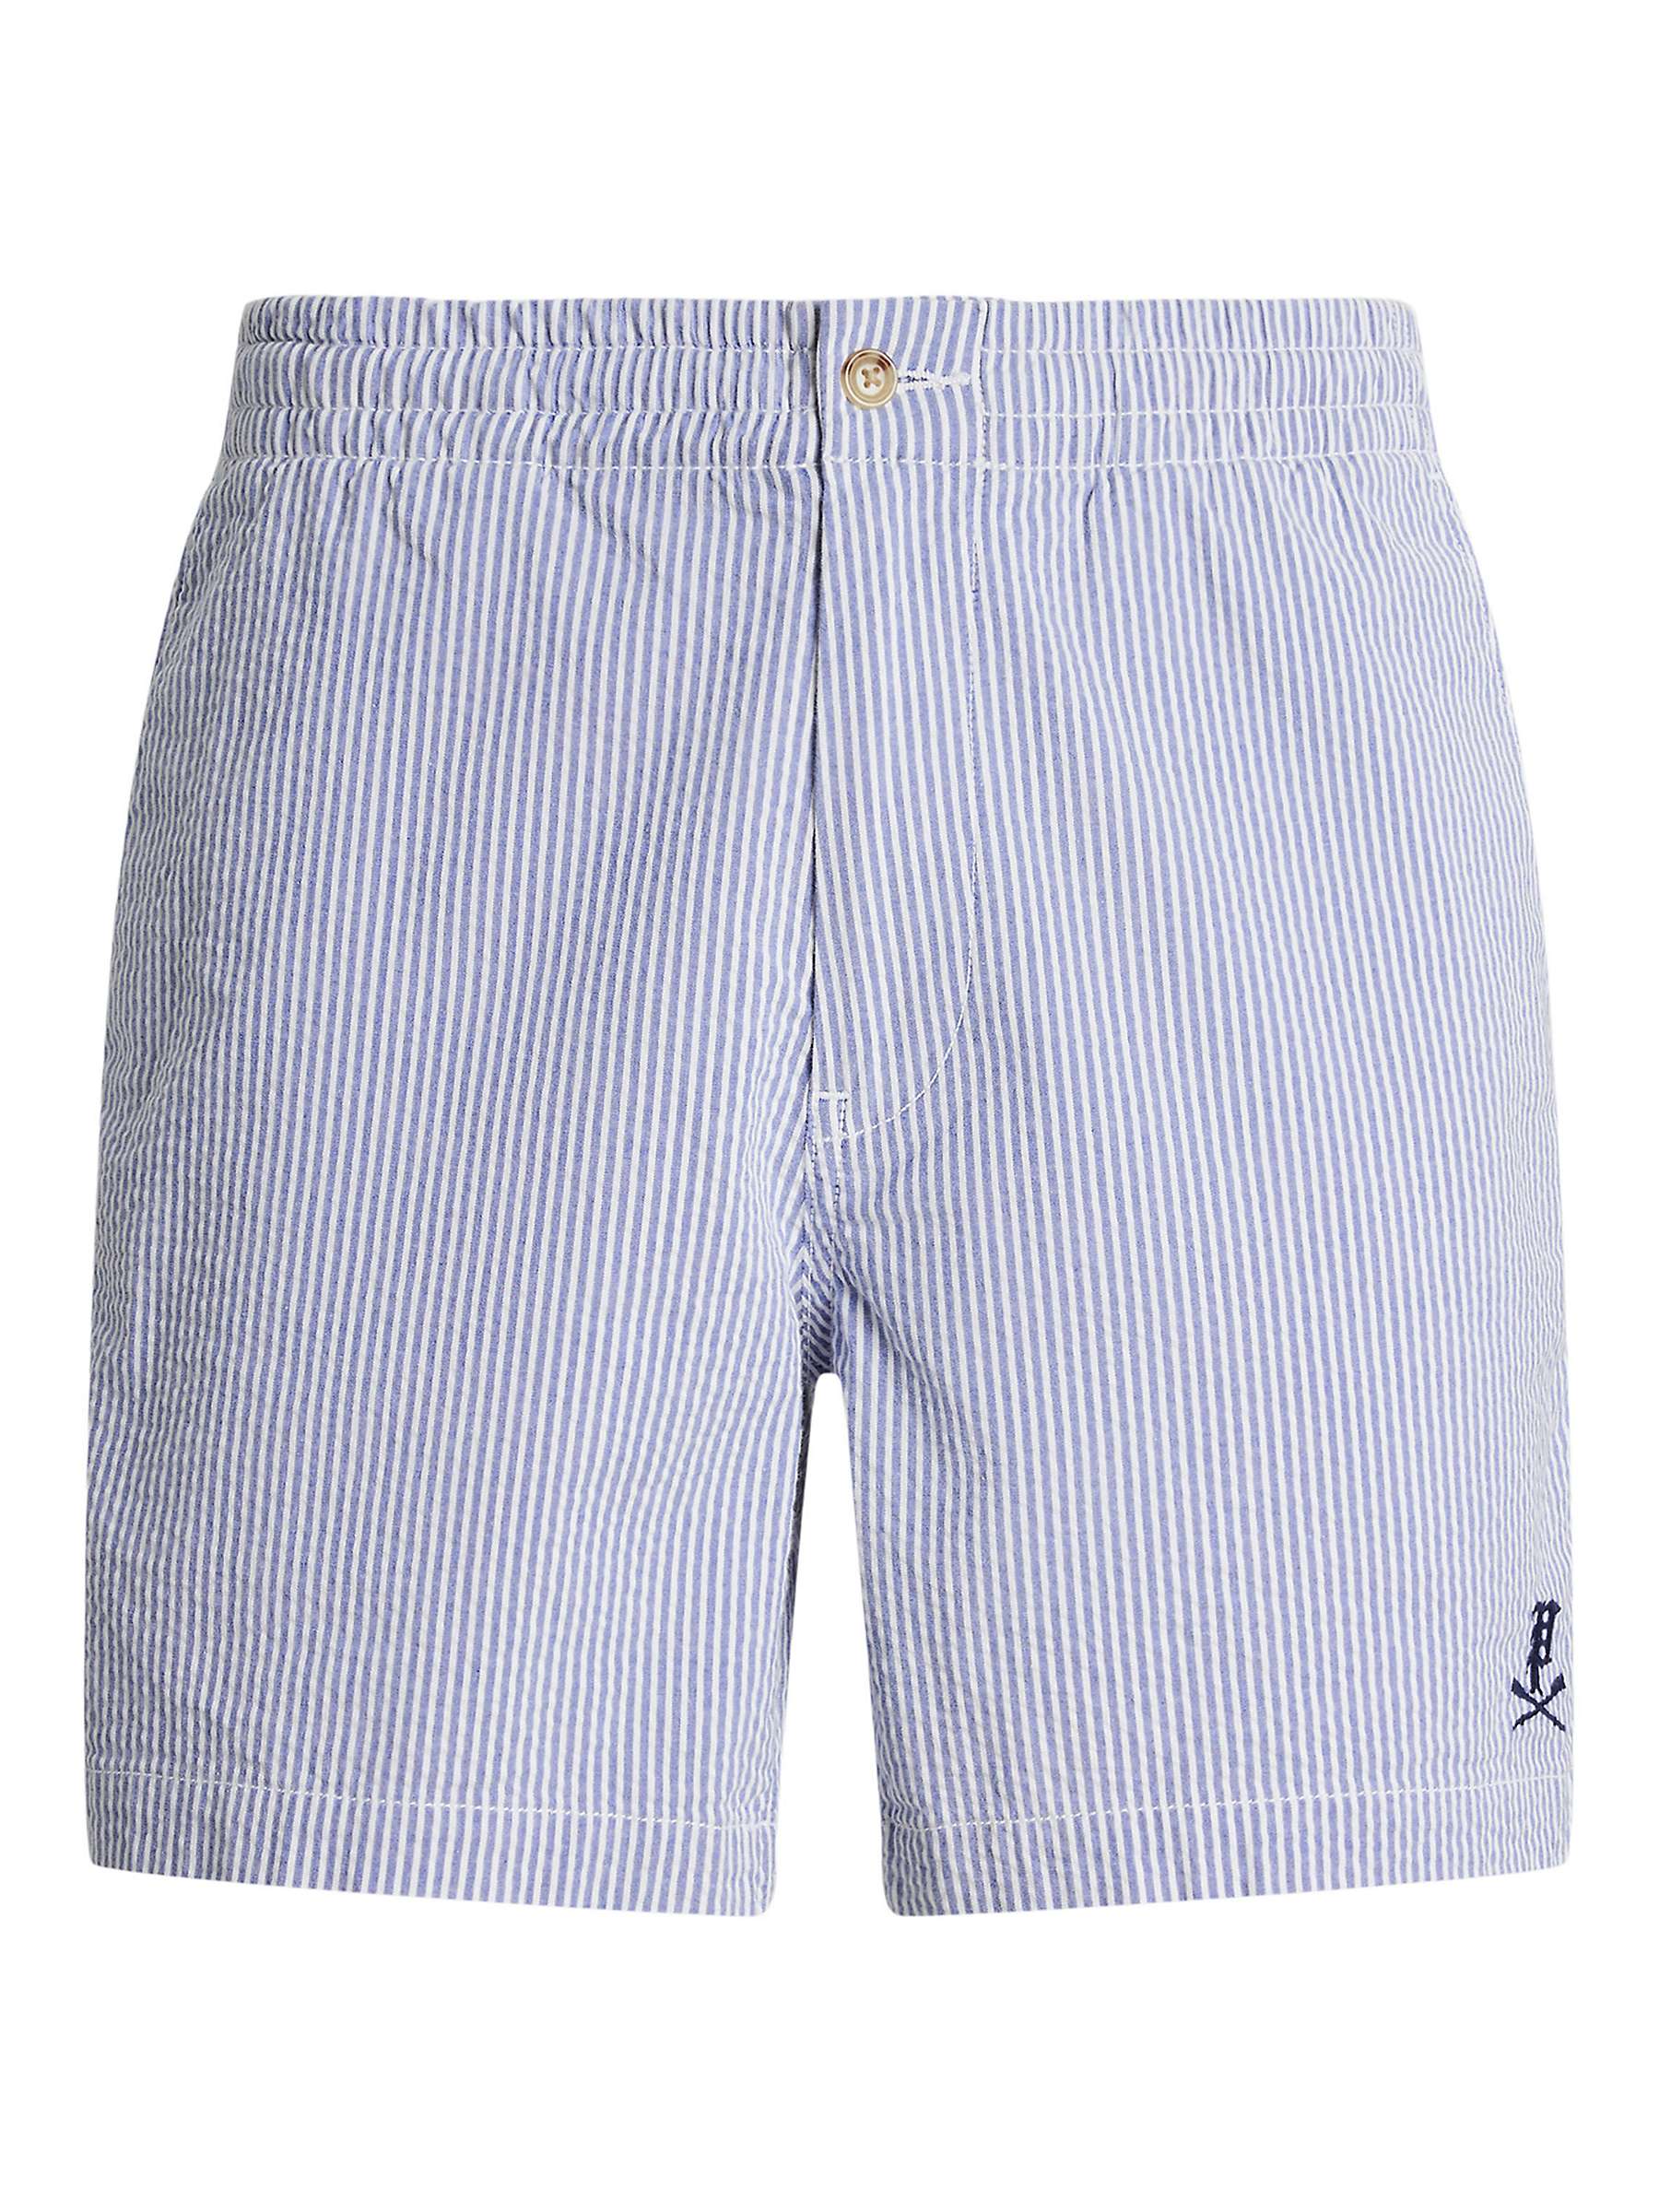 Buy Polo Ralph Lauren Prepster Seersucker 6" Shorts, Blue Online at johnlewis.com